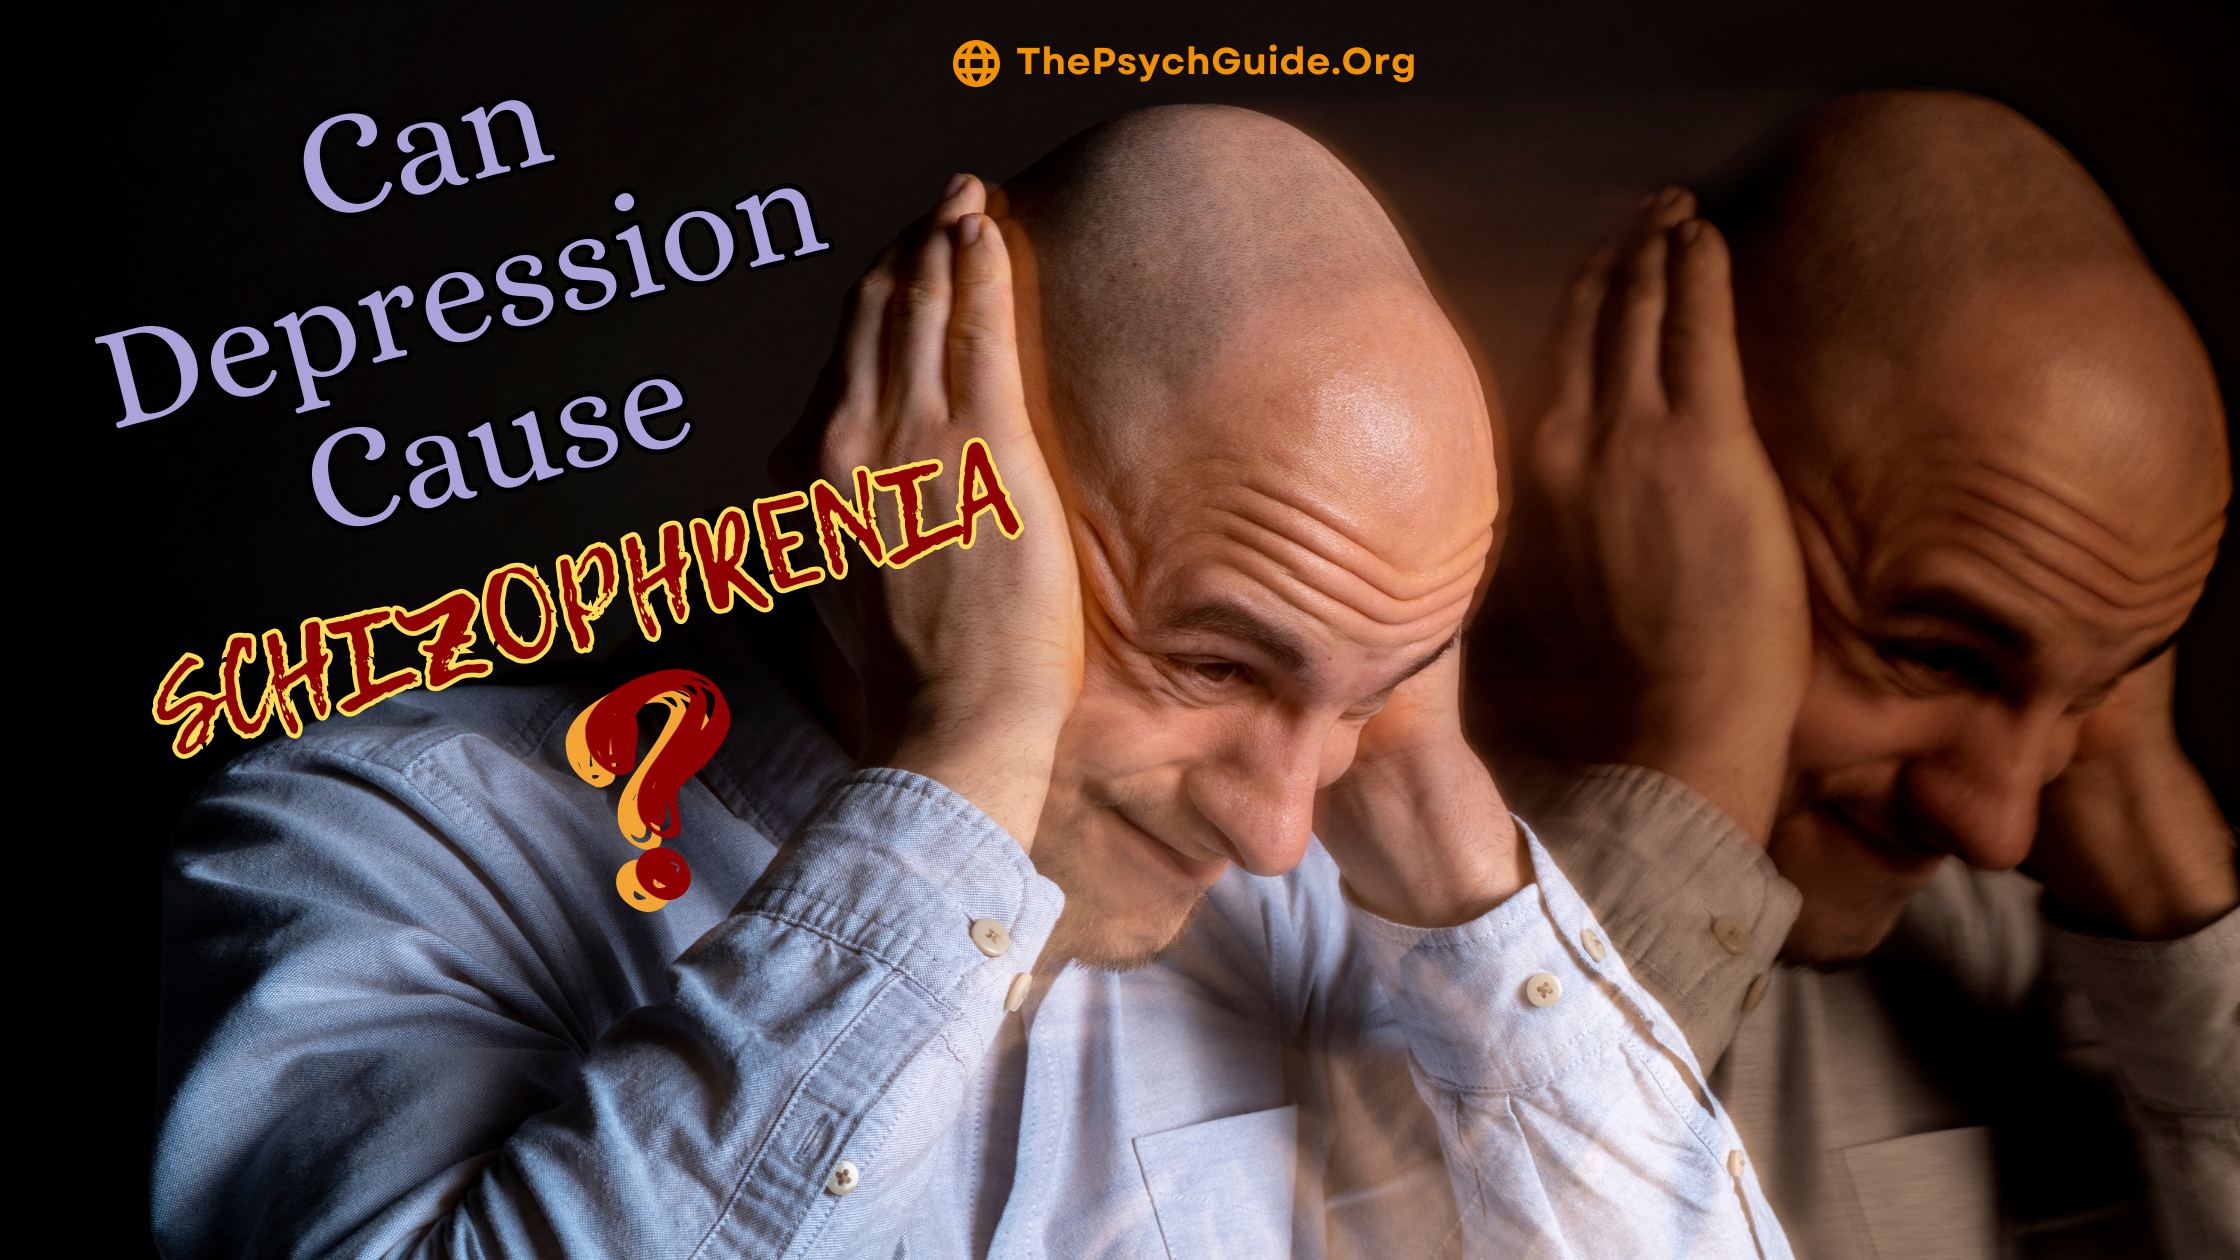 Can depression cause schizophrenia